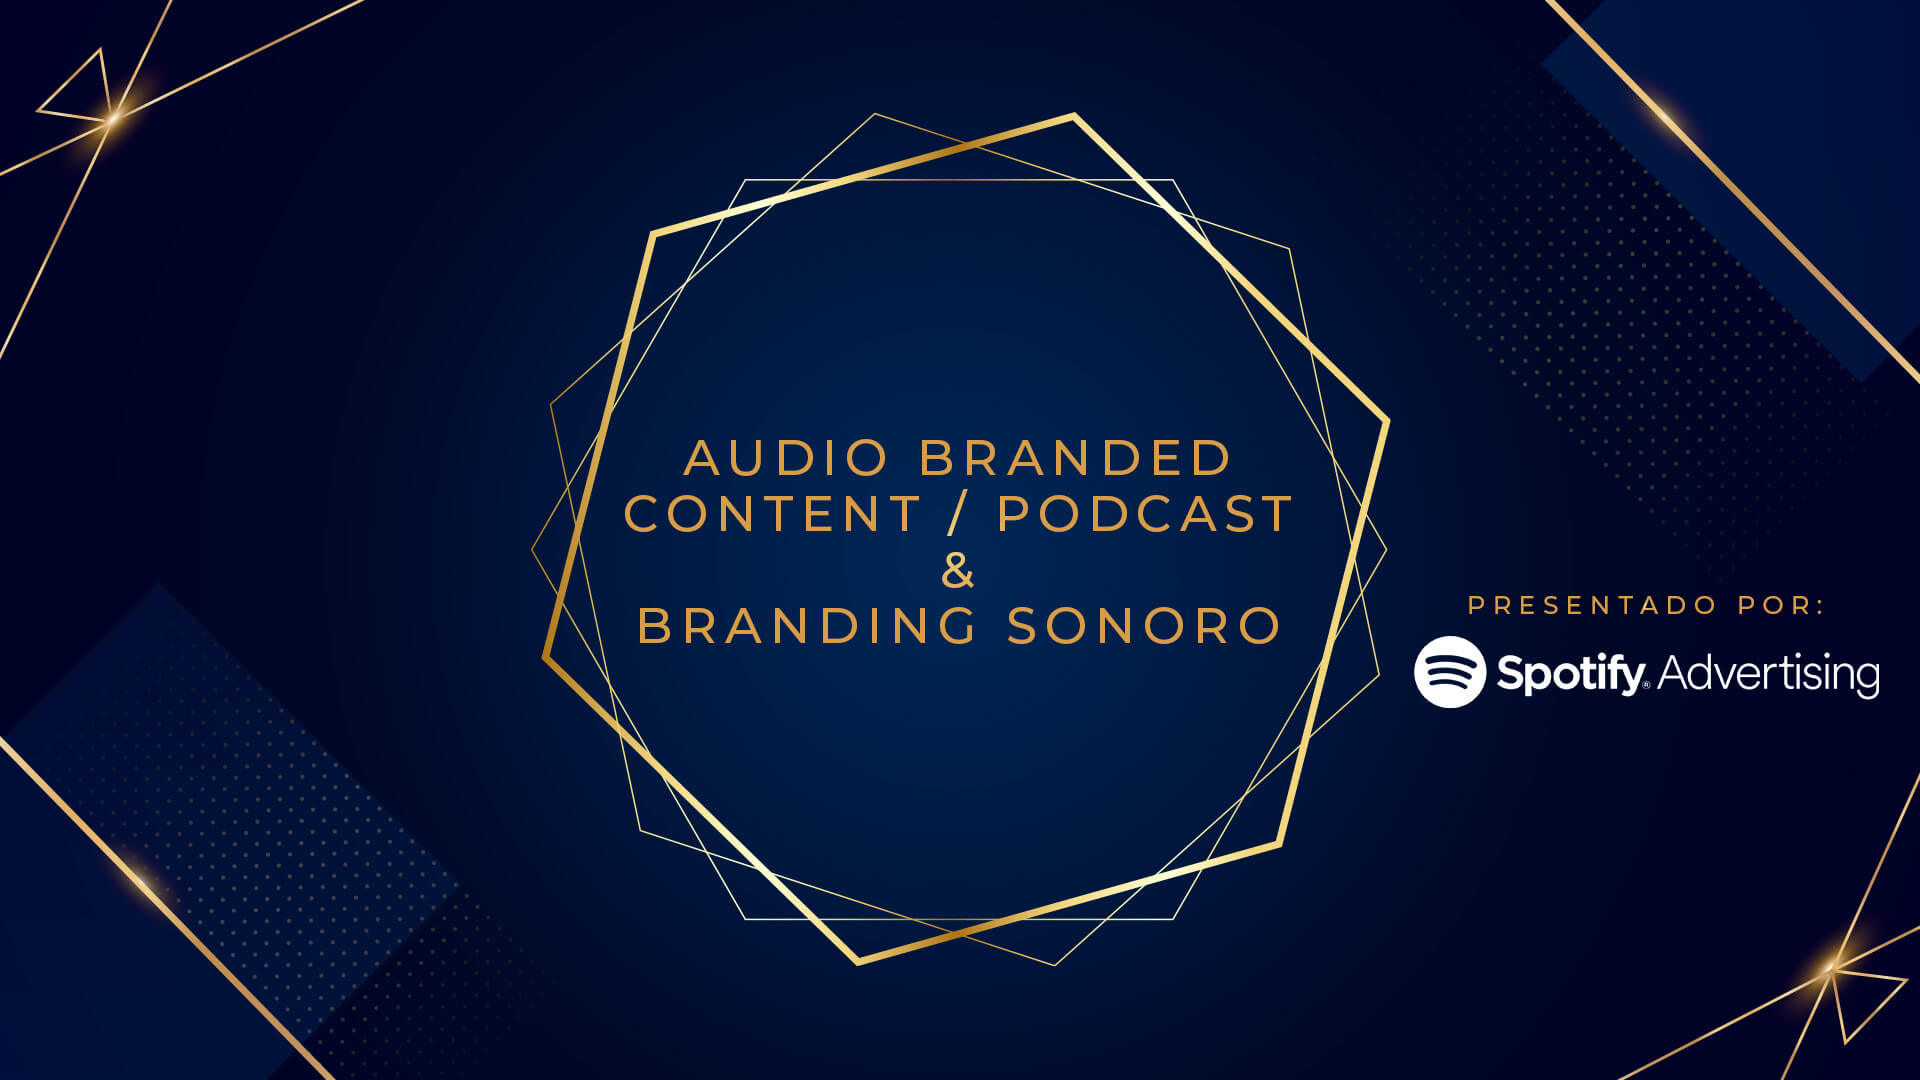 Audio Branded Content / Podcast & branding sonoro